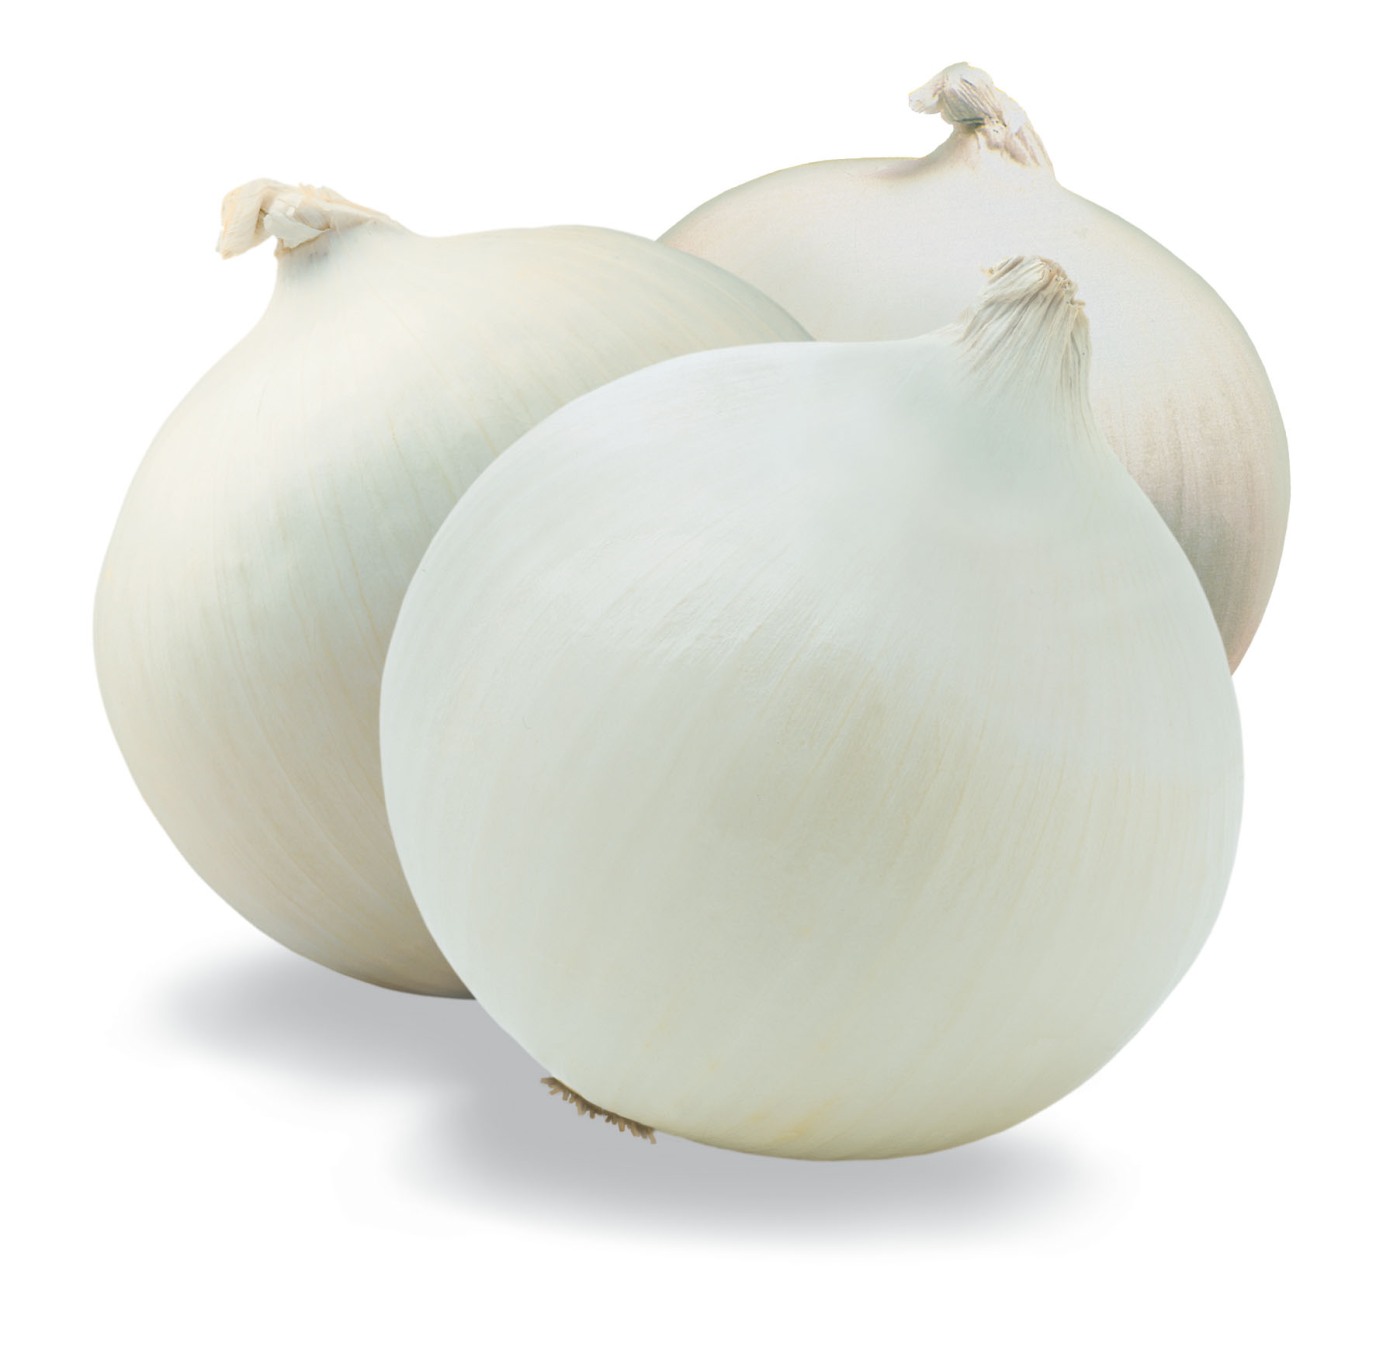 white_onions.jpg